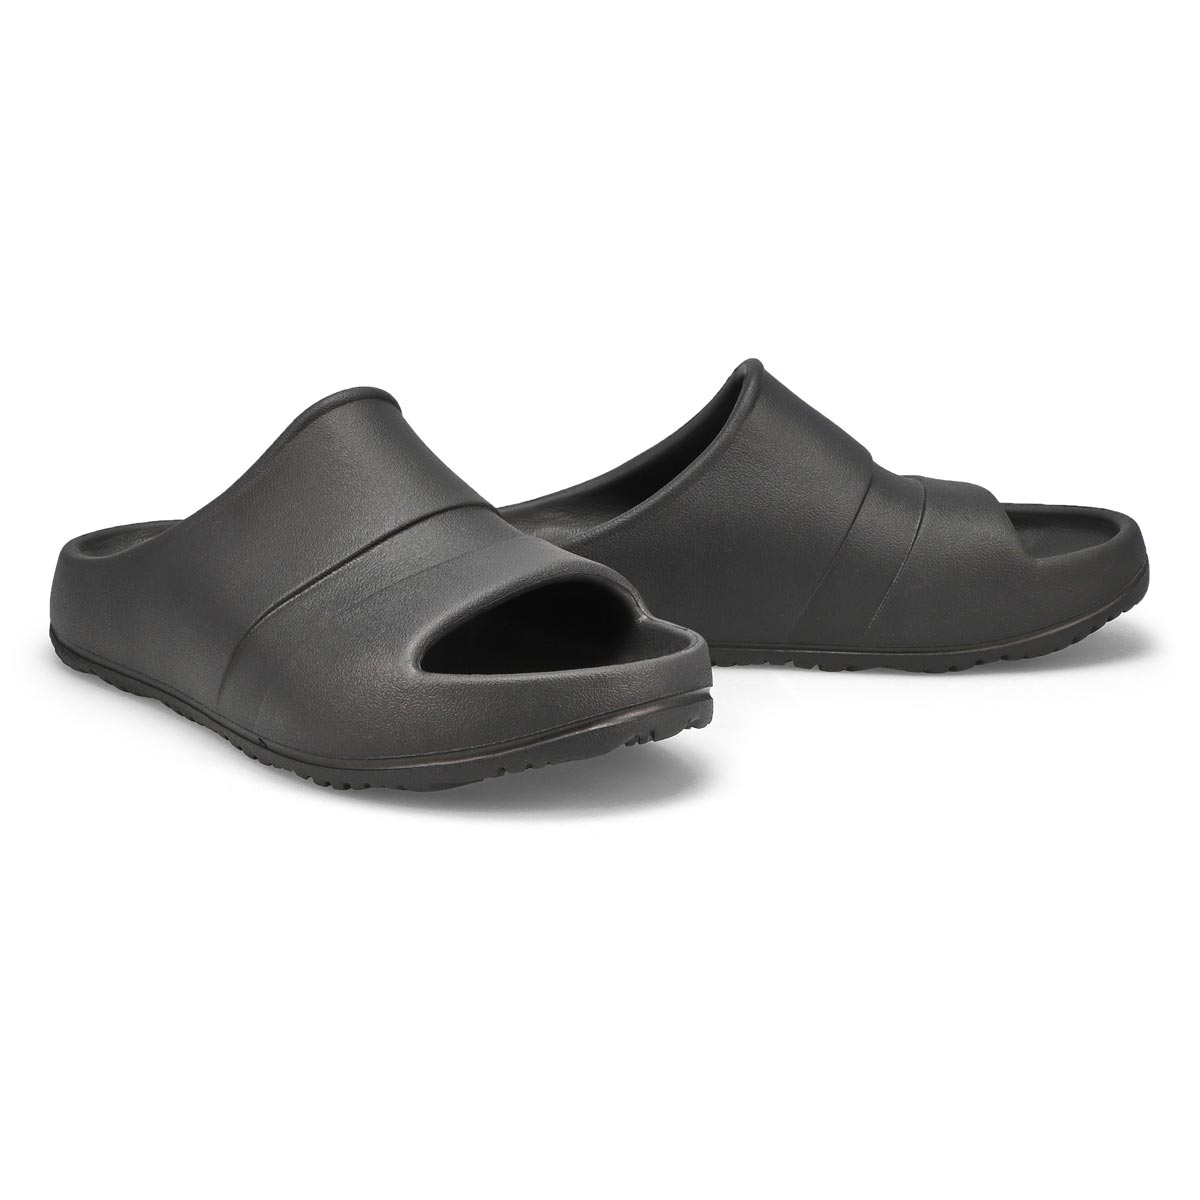 Men's Windward Float Slide Sandal - Black